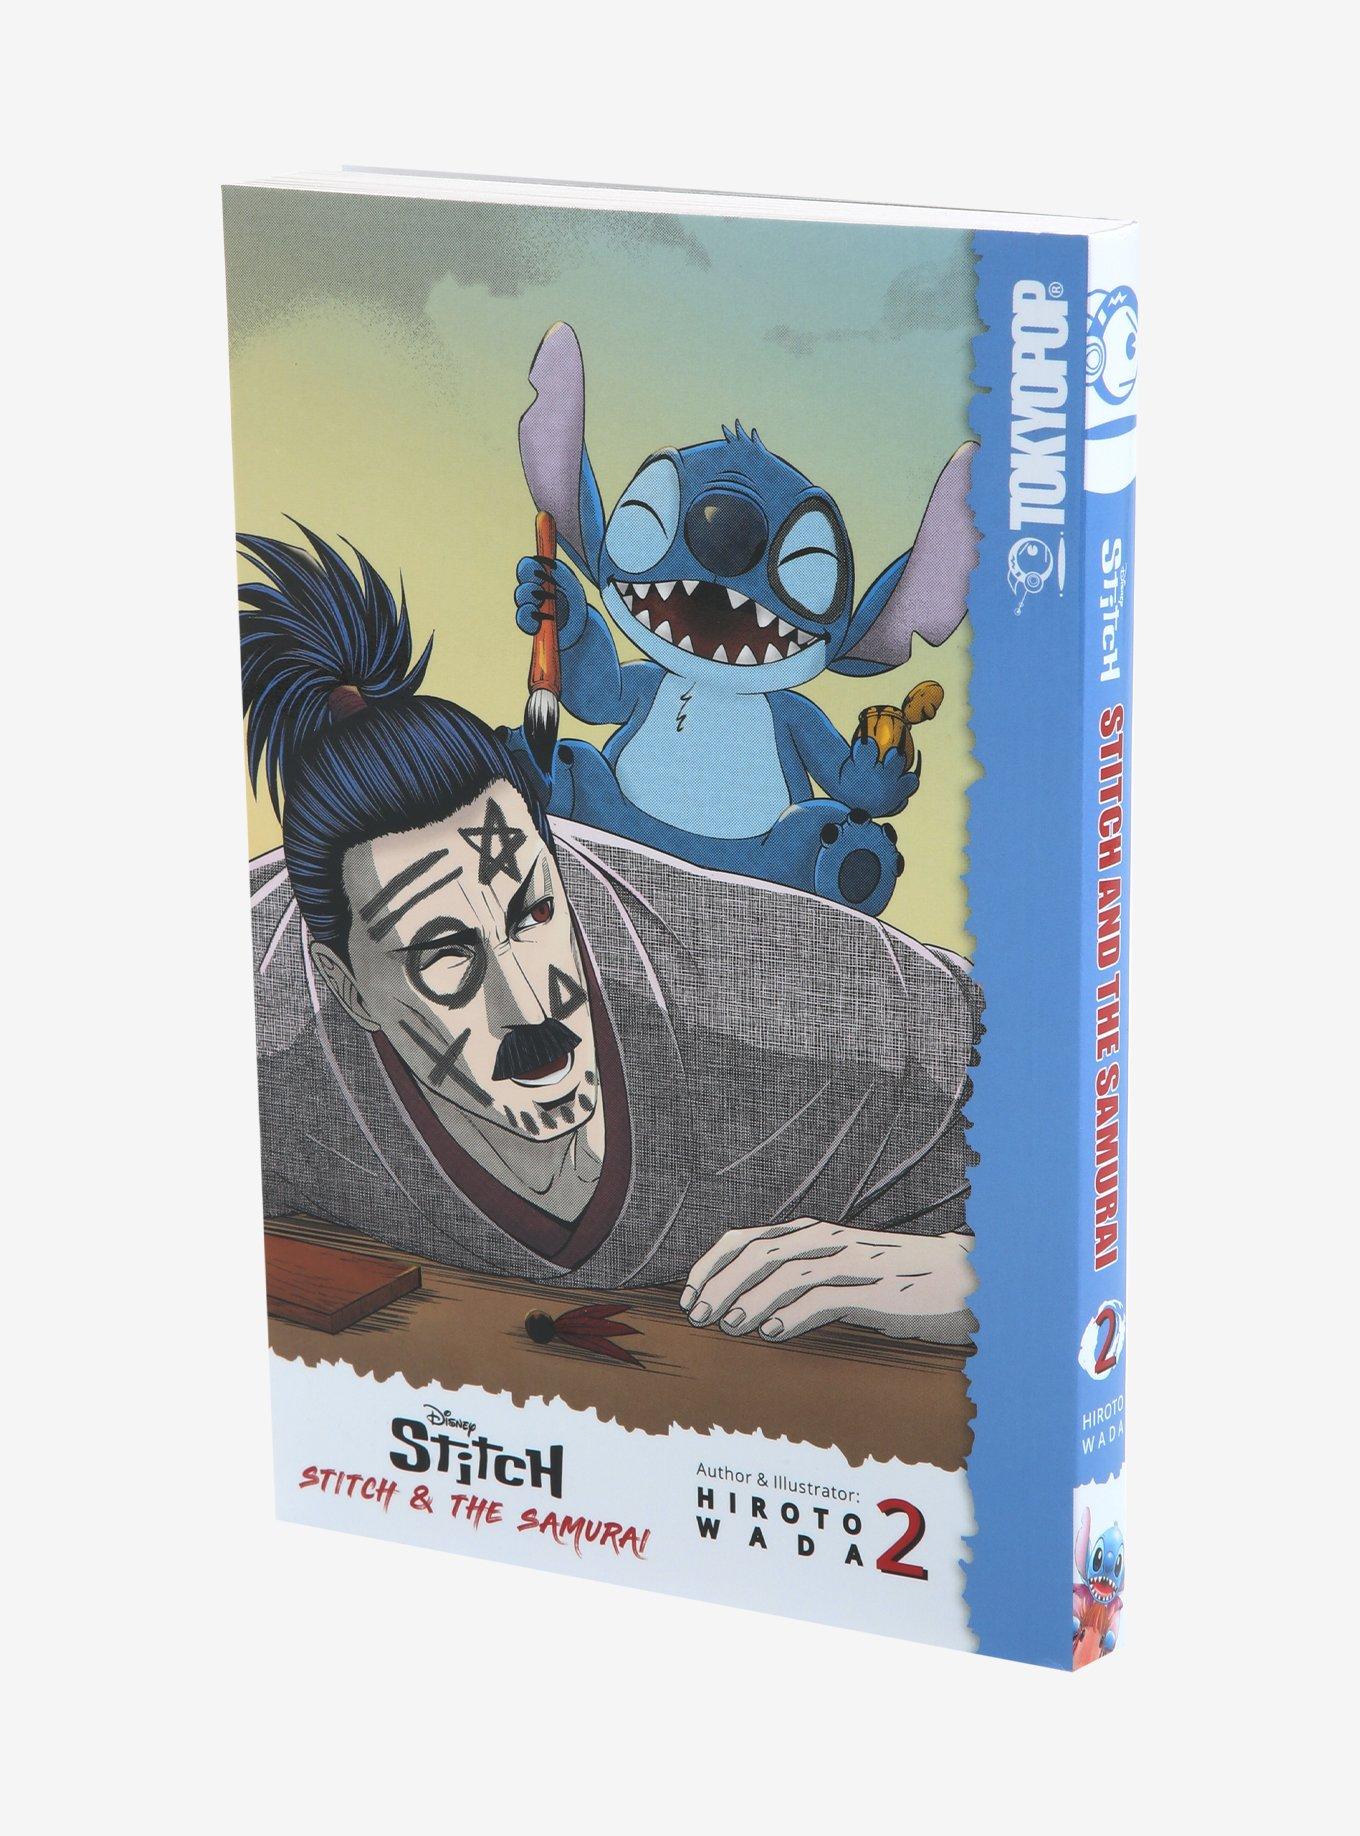 Afro Samurai Vol.1-2 Boxed Set @ Titan Comics